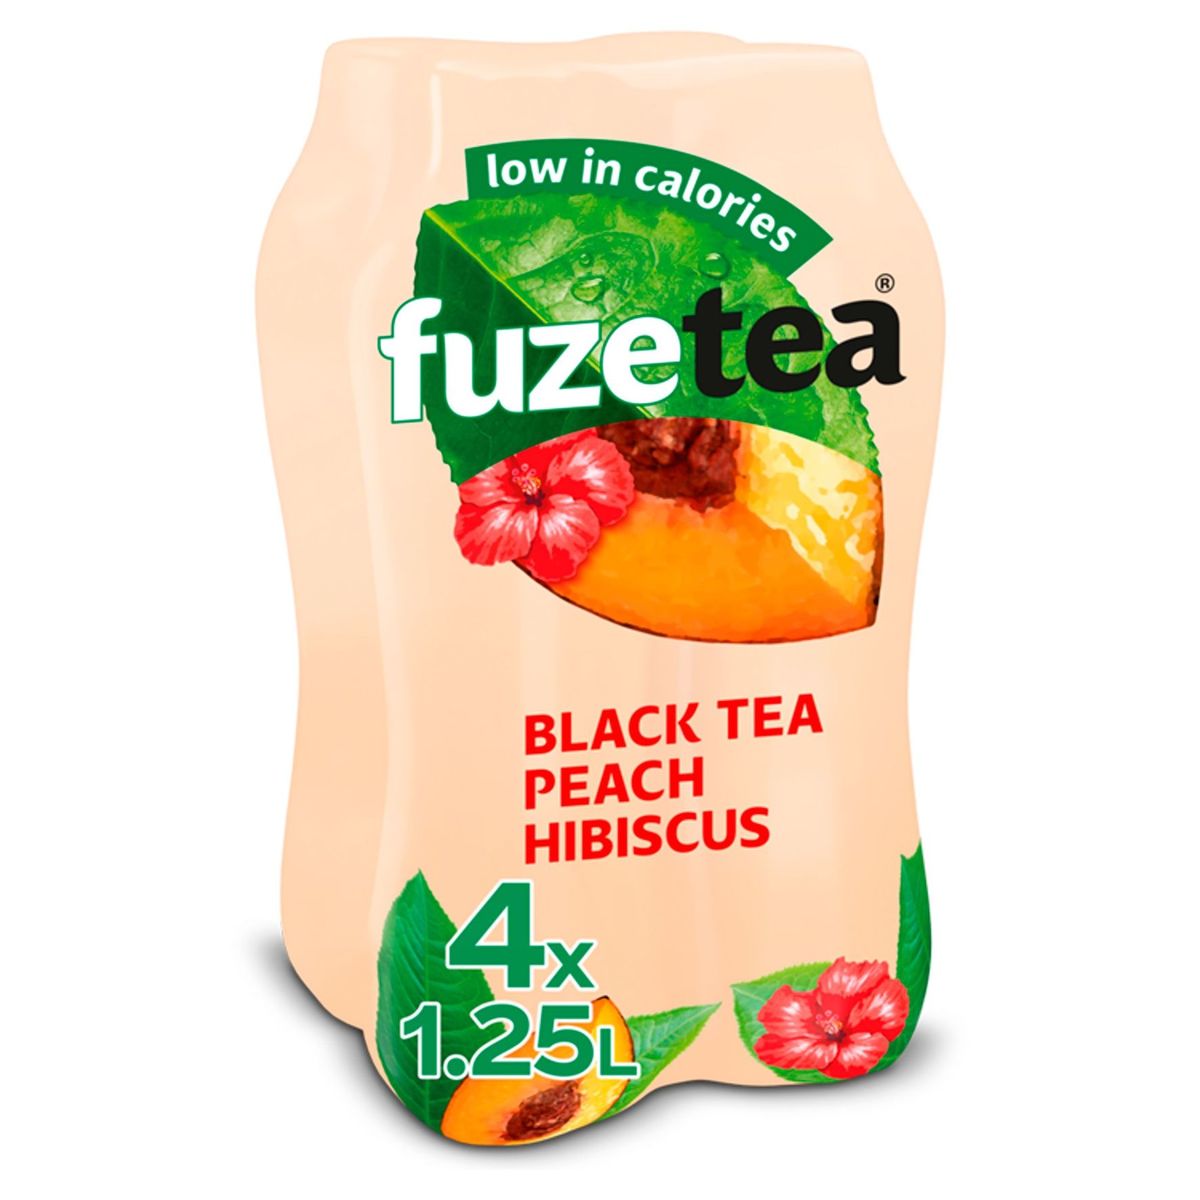 Fuze Tea Black Tea Peach Hibiscus Pet Iced Tea 4 x 1.25 L